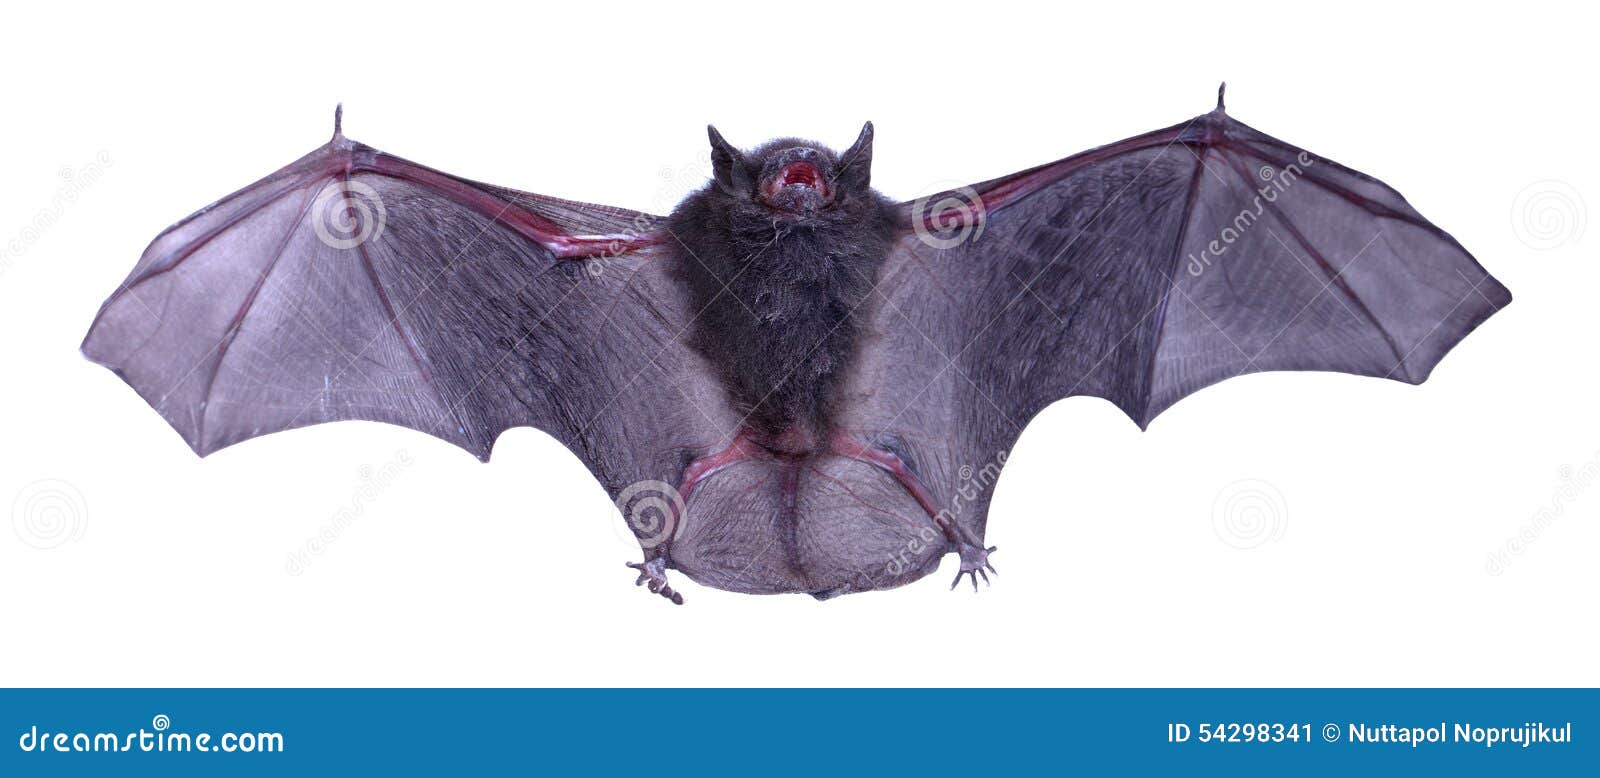 6,510 Black Bat Animal Stock Photos - Free & Royalty-Free Stock Photos from  Dreamstime